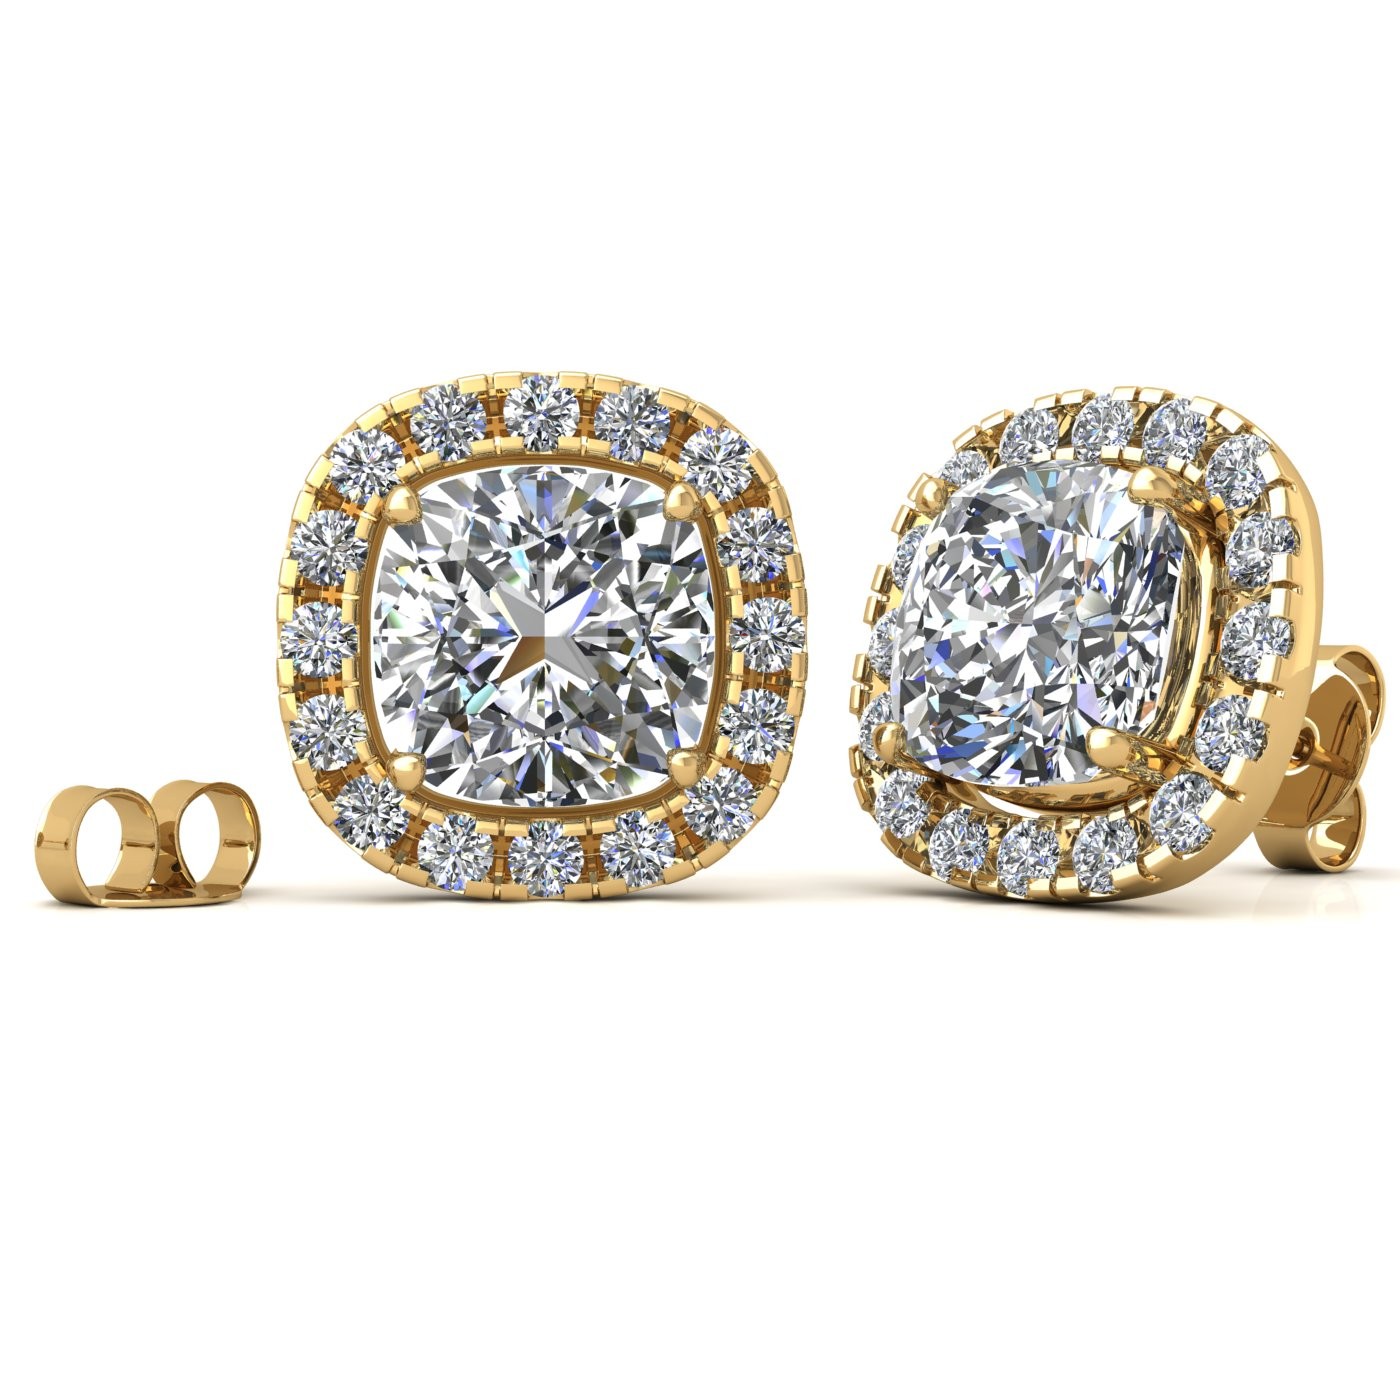 18k rose gold  2,5 ct each (5,0 tcw) 4 prongs cushion shape diamond earrings with diamond pavÉ set halo Photos & images